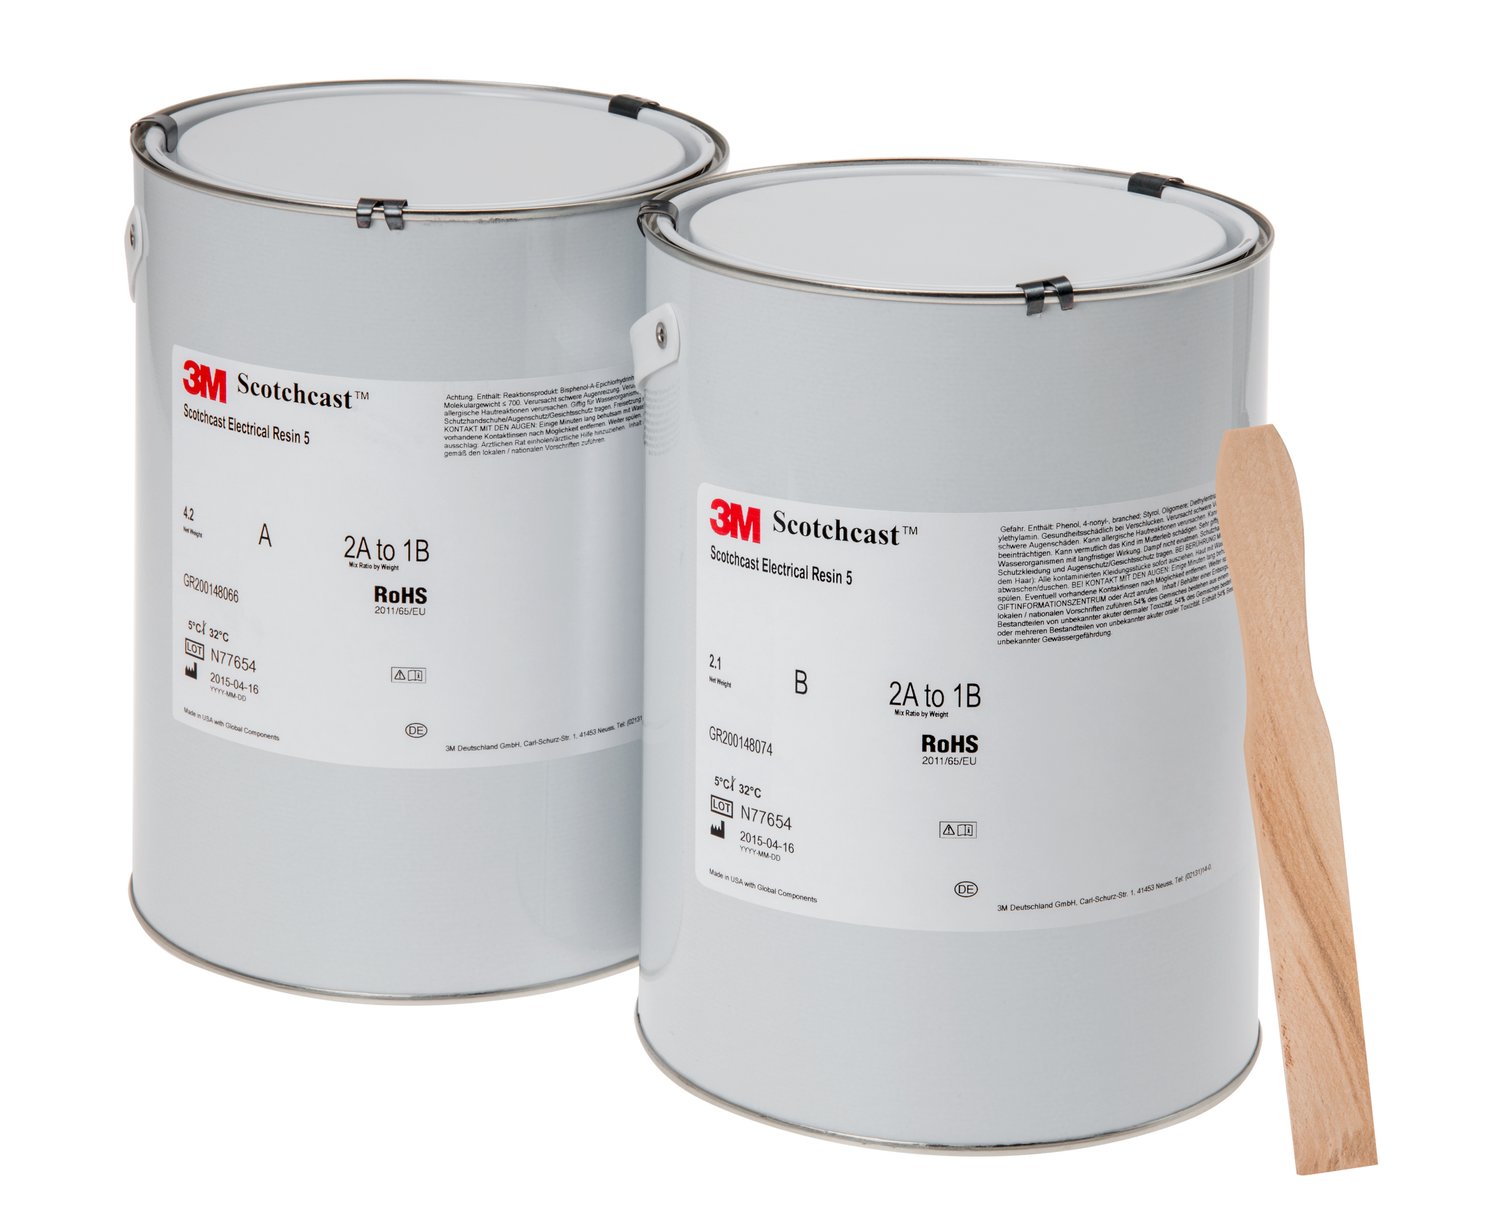 7010414147 - 3M Scotchcast Electrical Resin 5N, part B, 23 lbs./pail